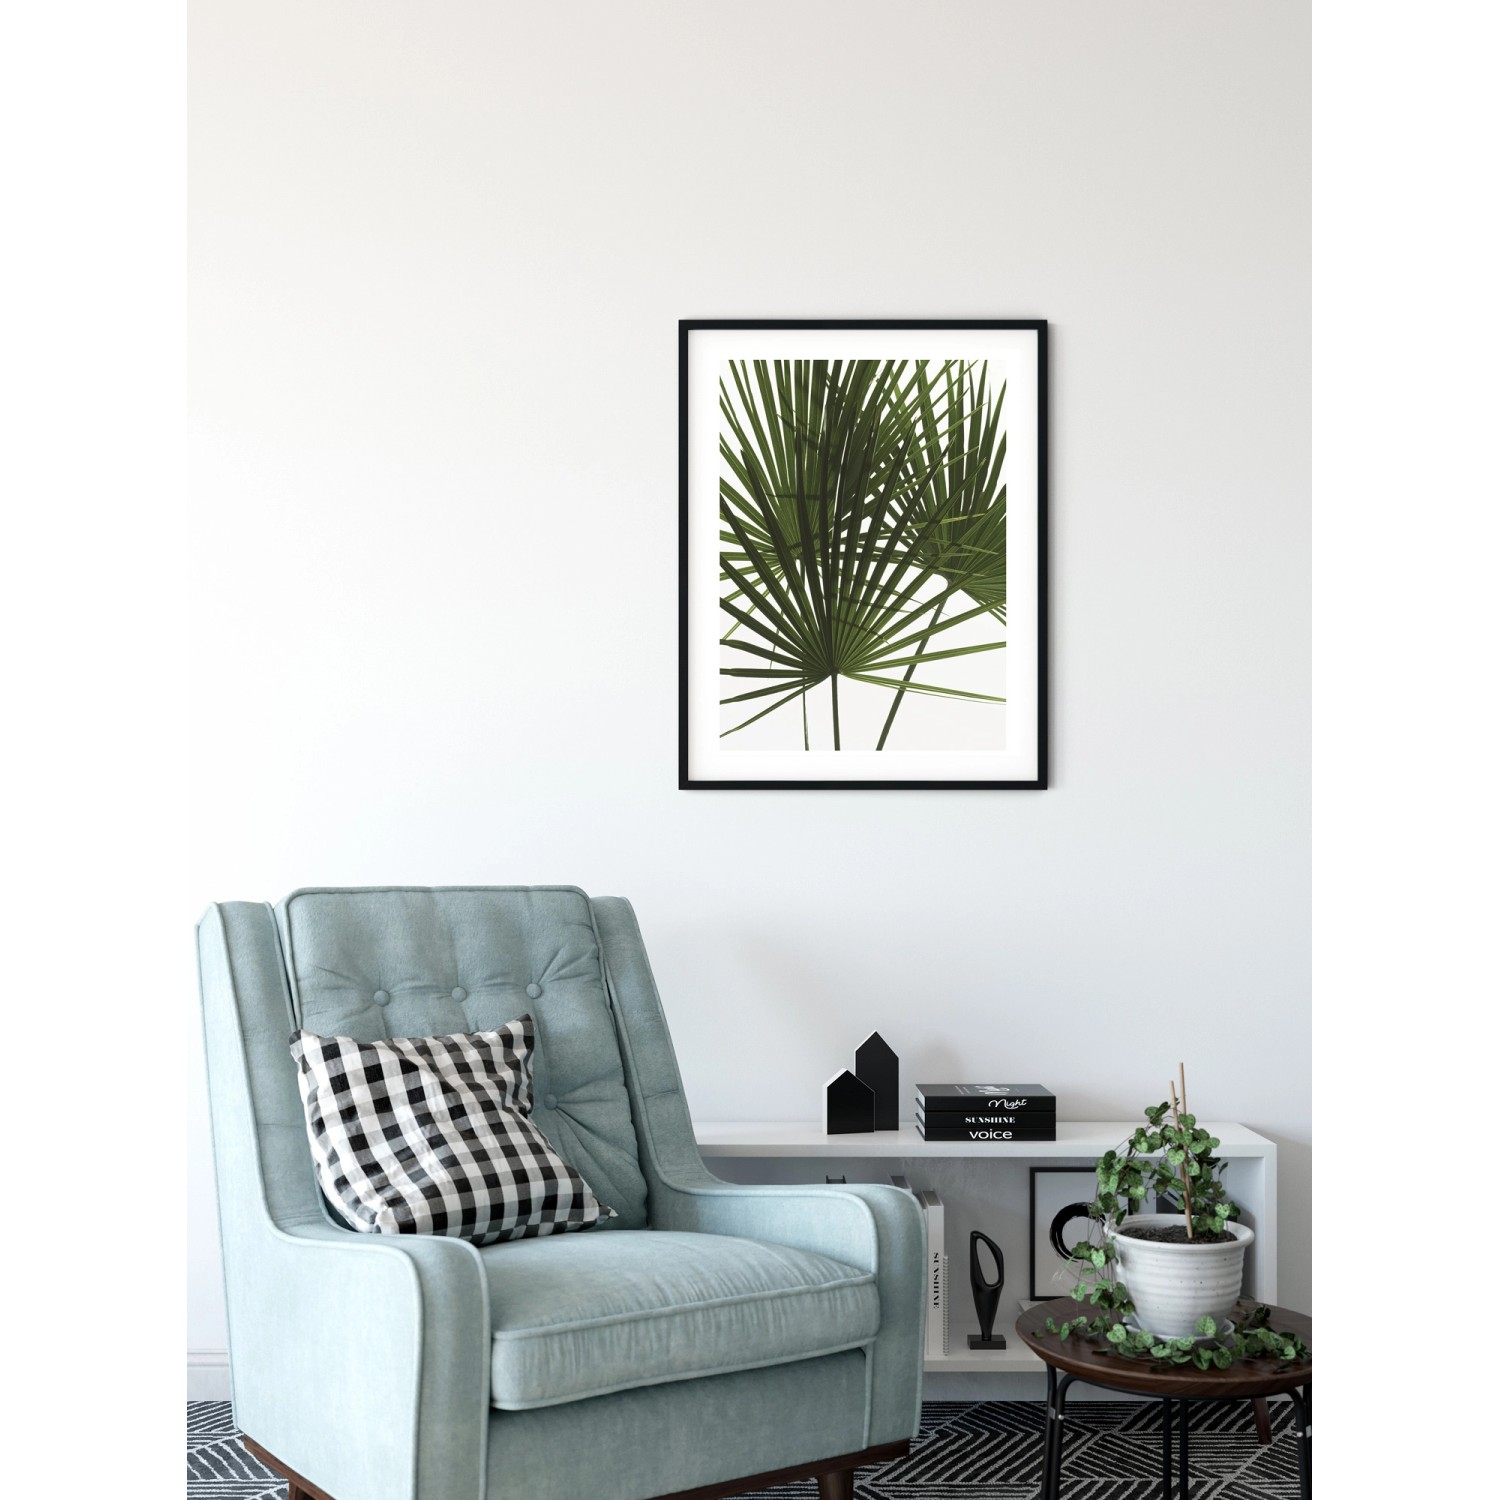 Komar Wandbild Palmtree Leaves 30 x cm 40 bei cm OBI kaufen